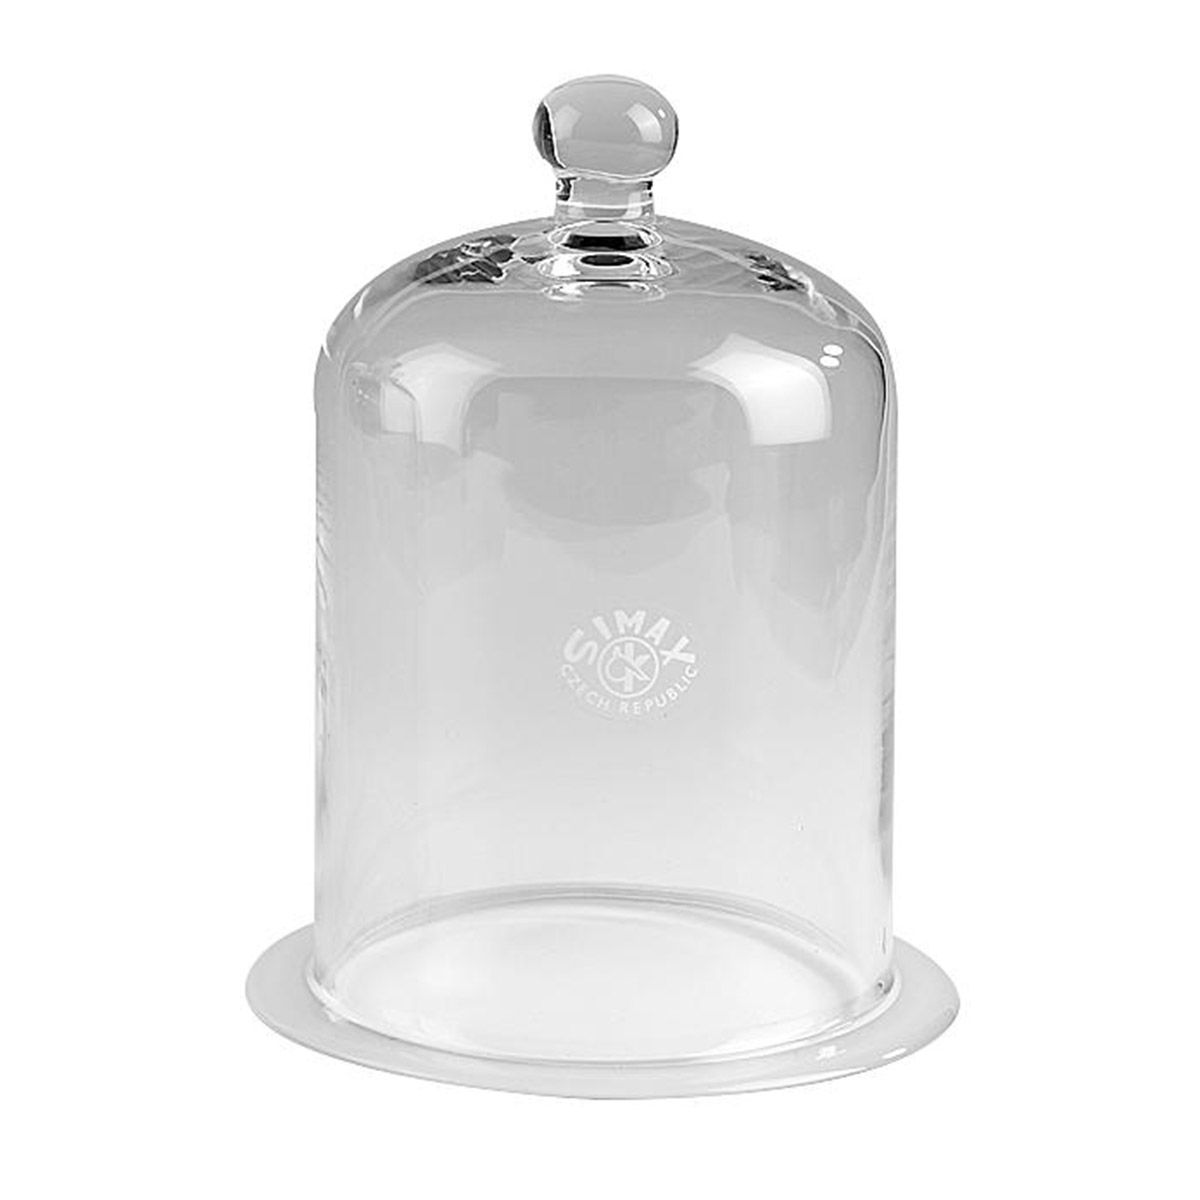 Bell Jar with knob